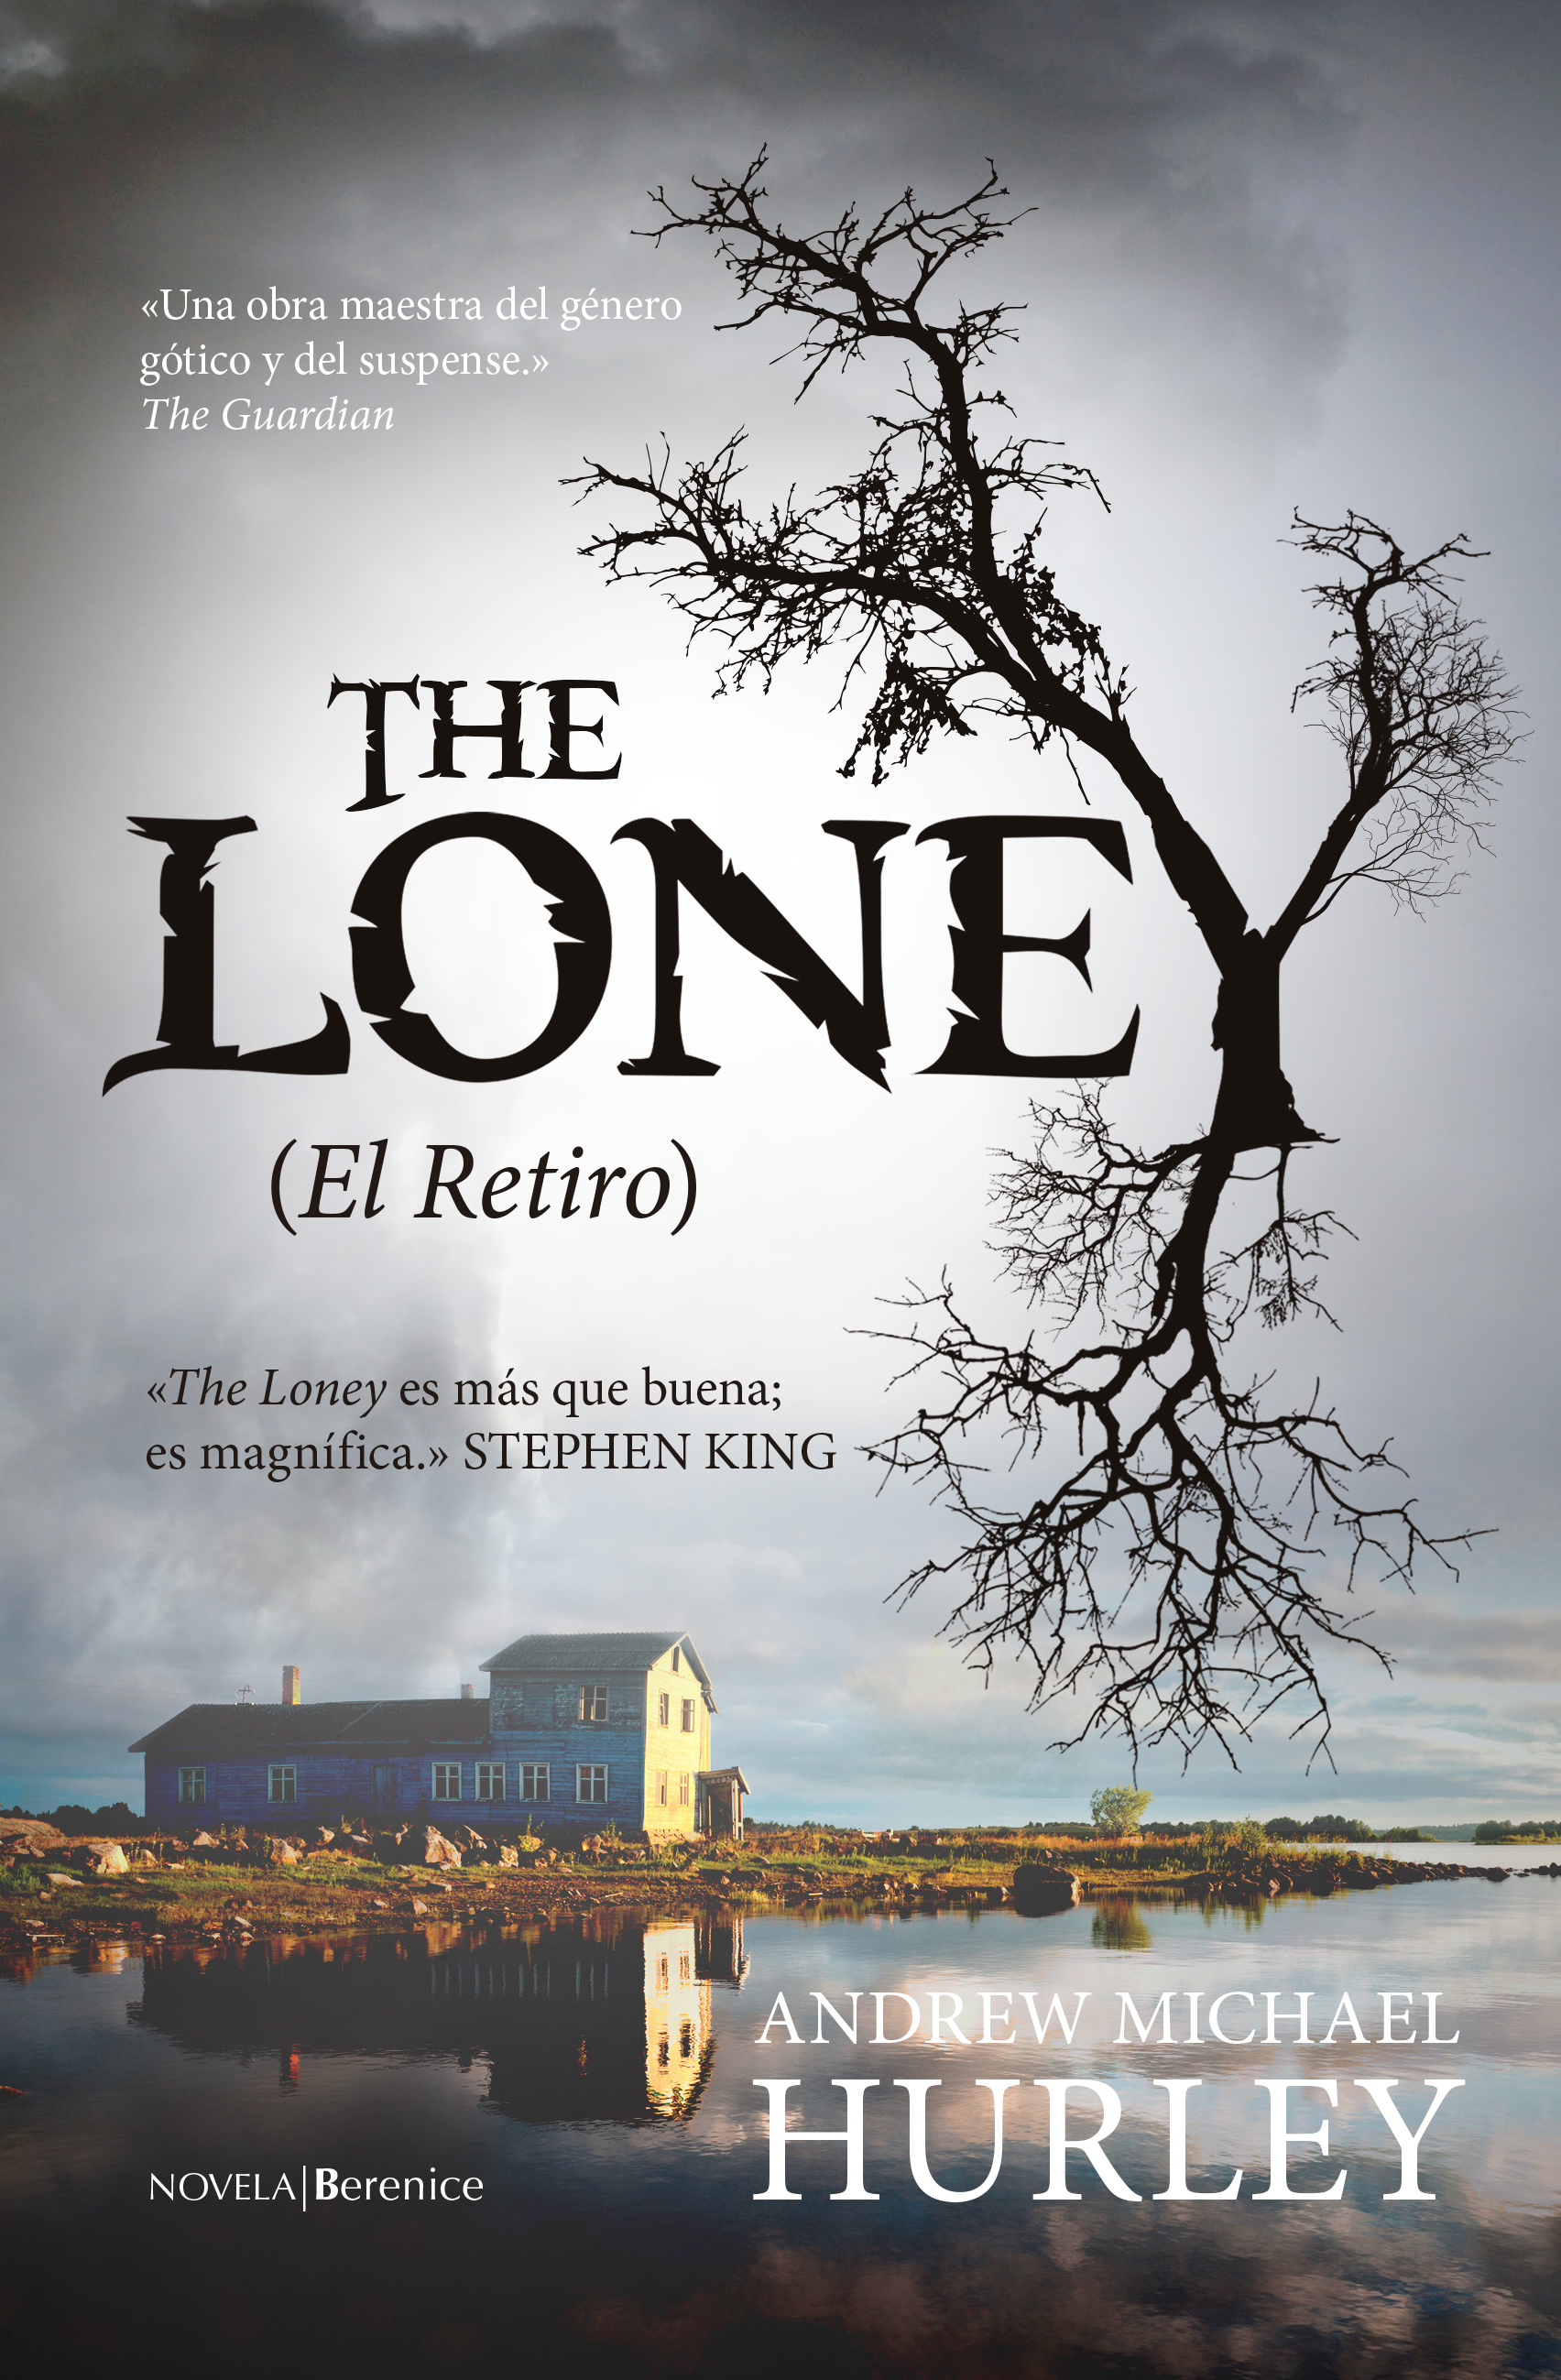 Cubierta_The Lonely (El Retiro)_25mm_290416.indd